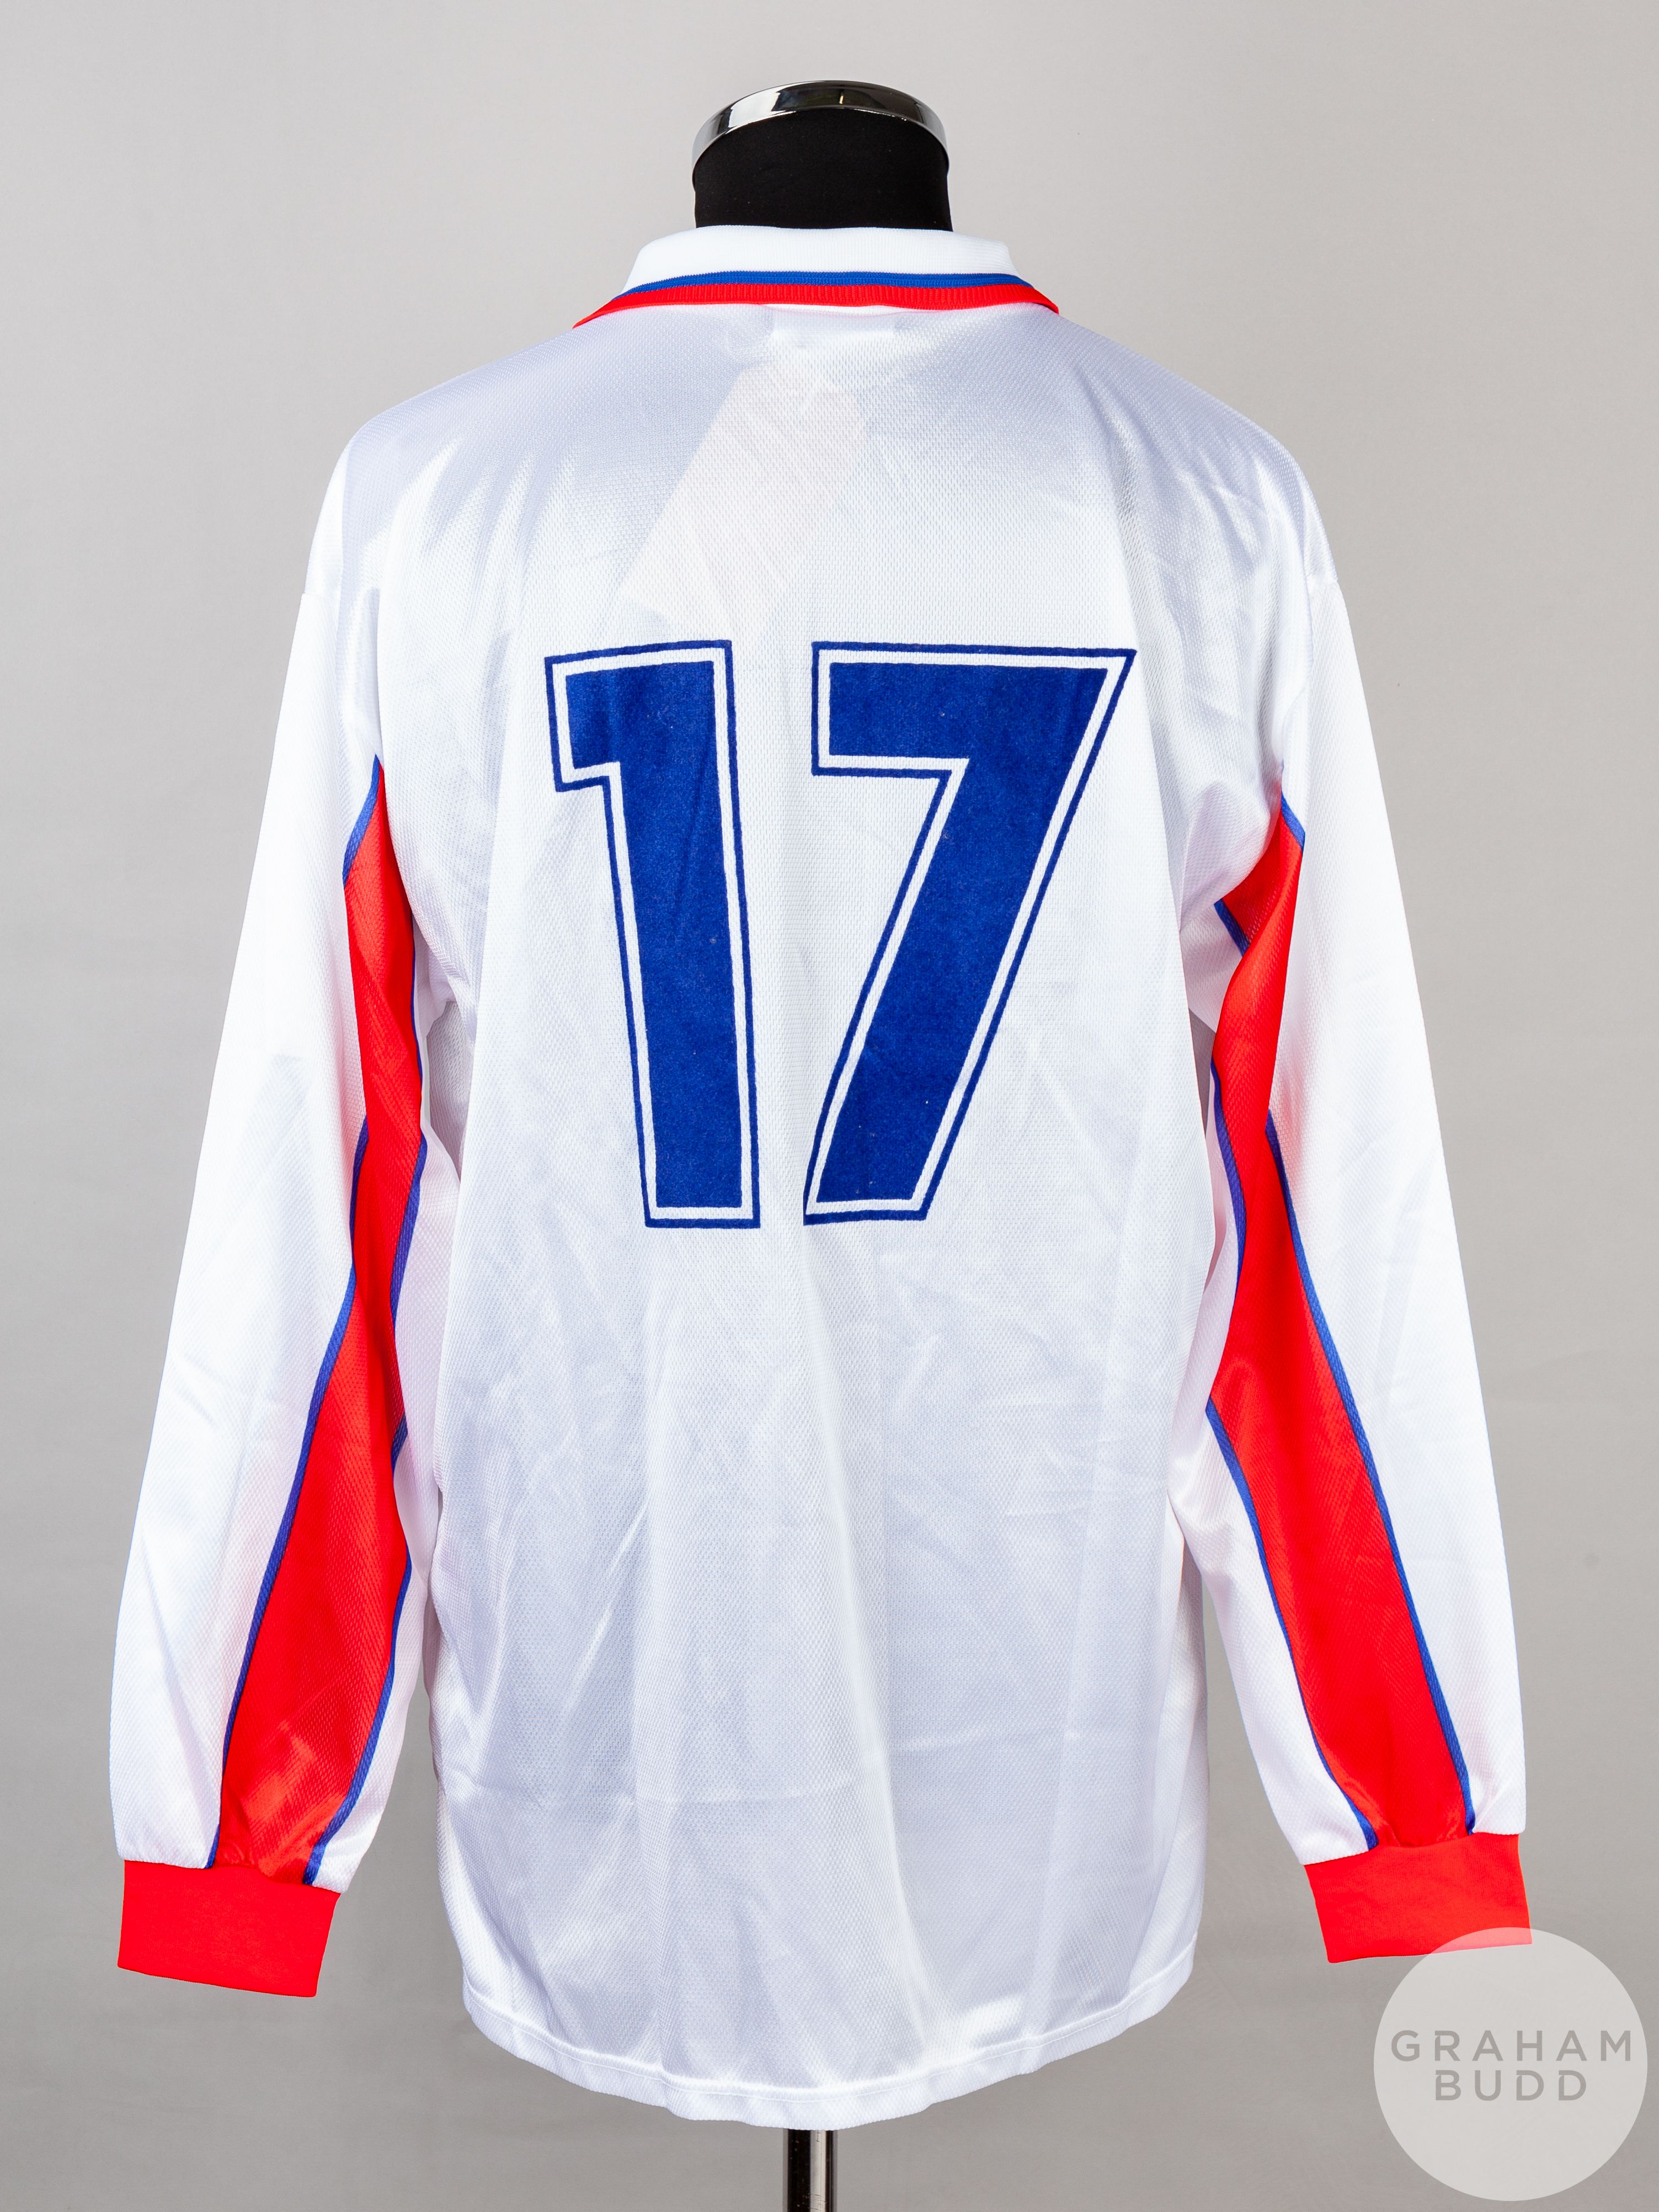 White and red No.17 Czechoslovakia v. Scotland long-sleeved shirt, 1999 - Image 2 of 5